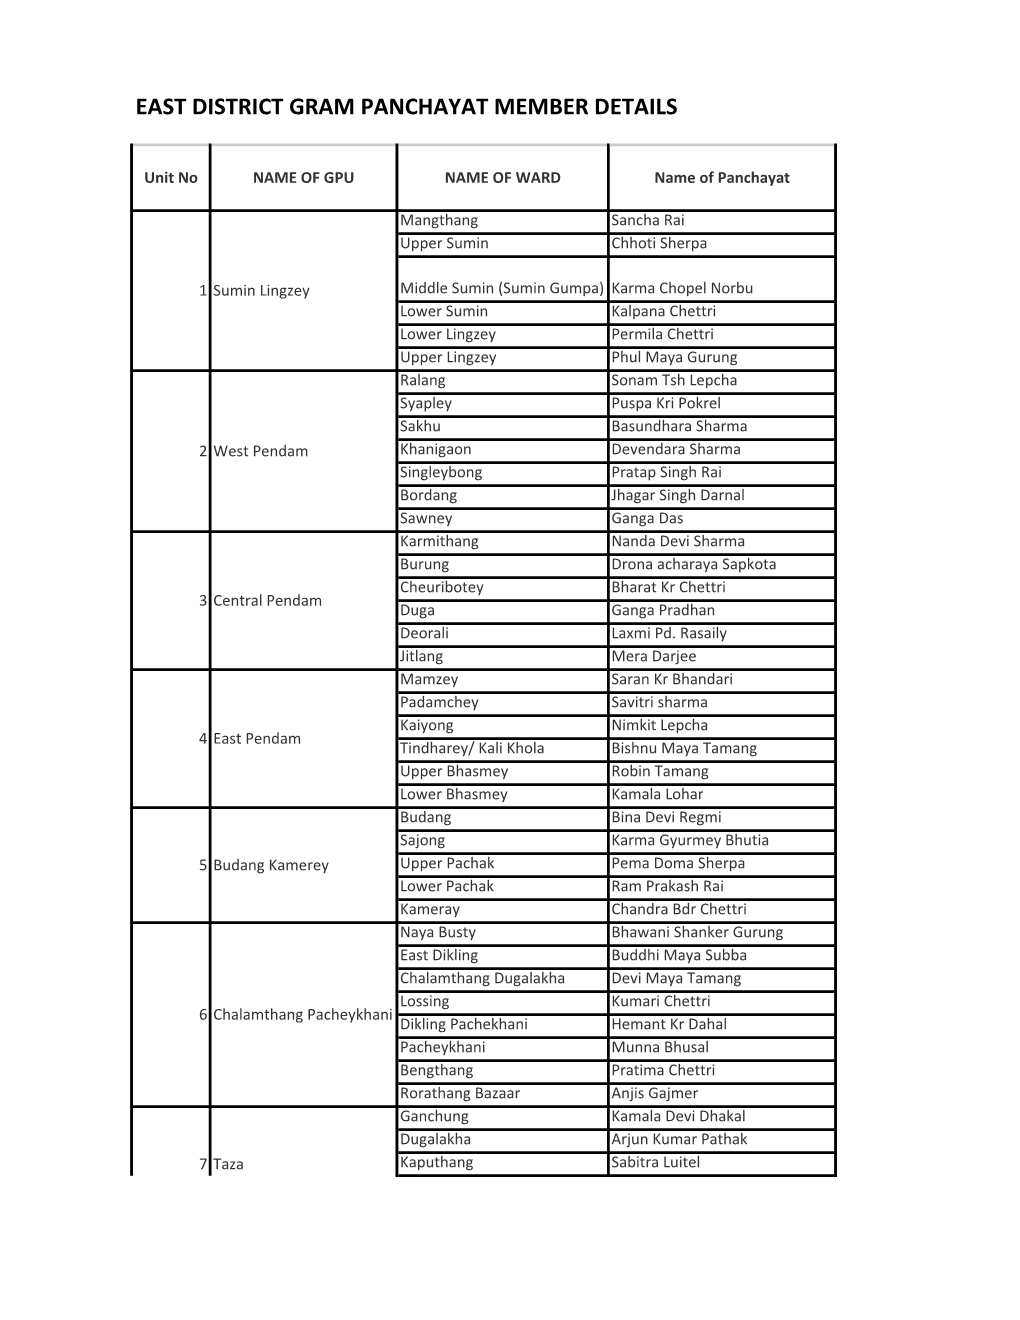 East District Gram Panchayat Member Details